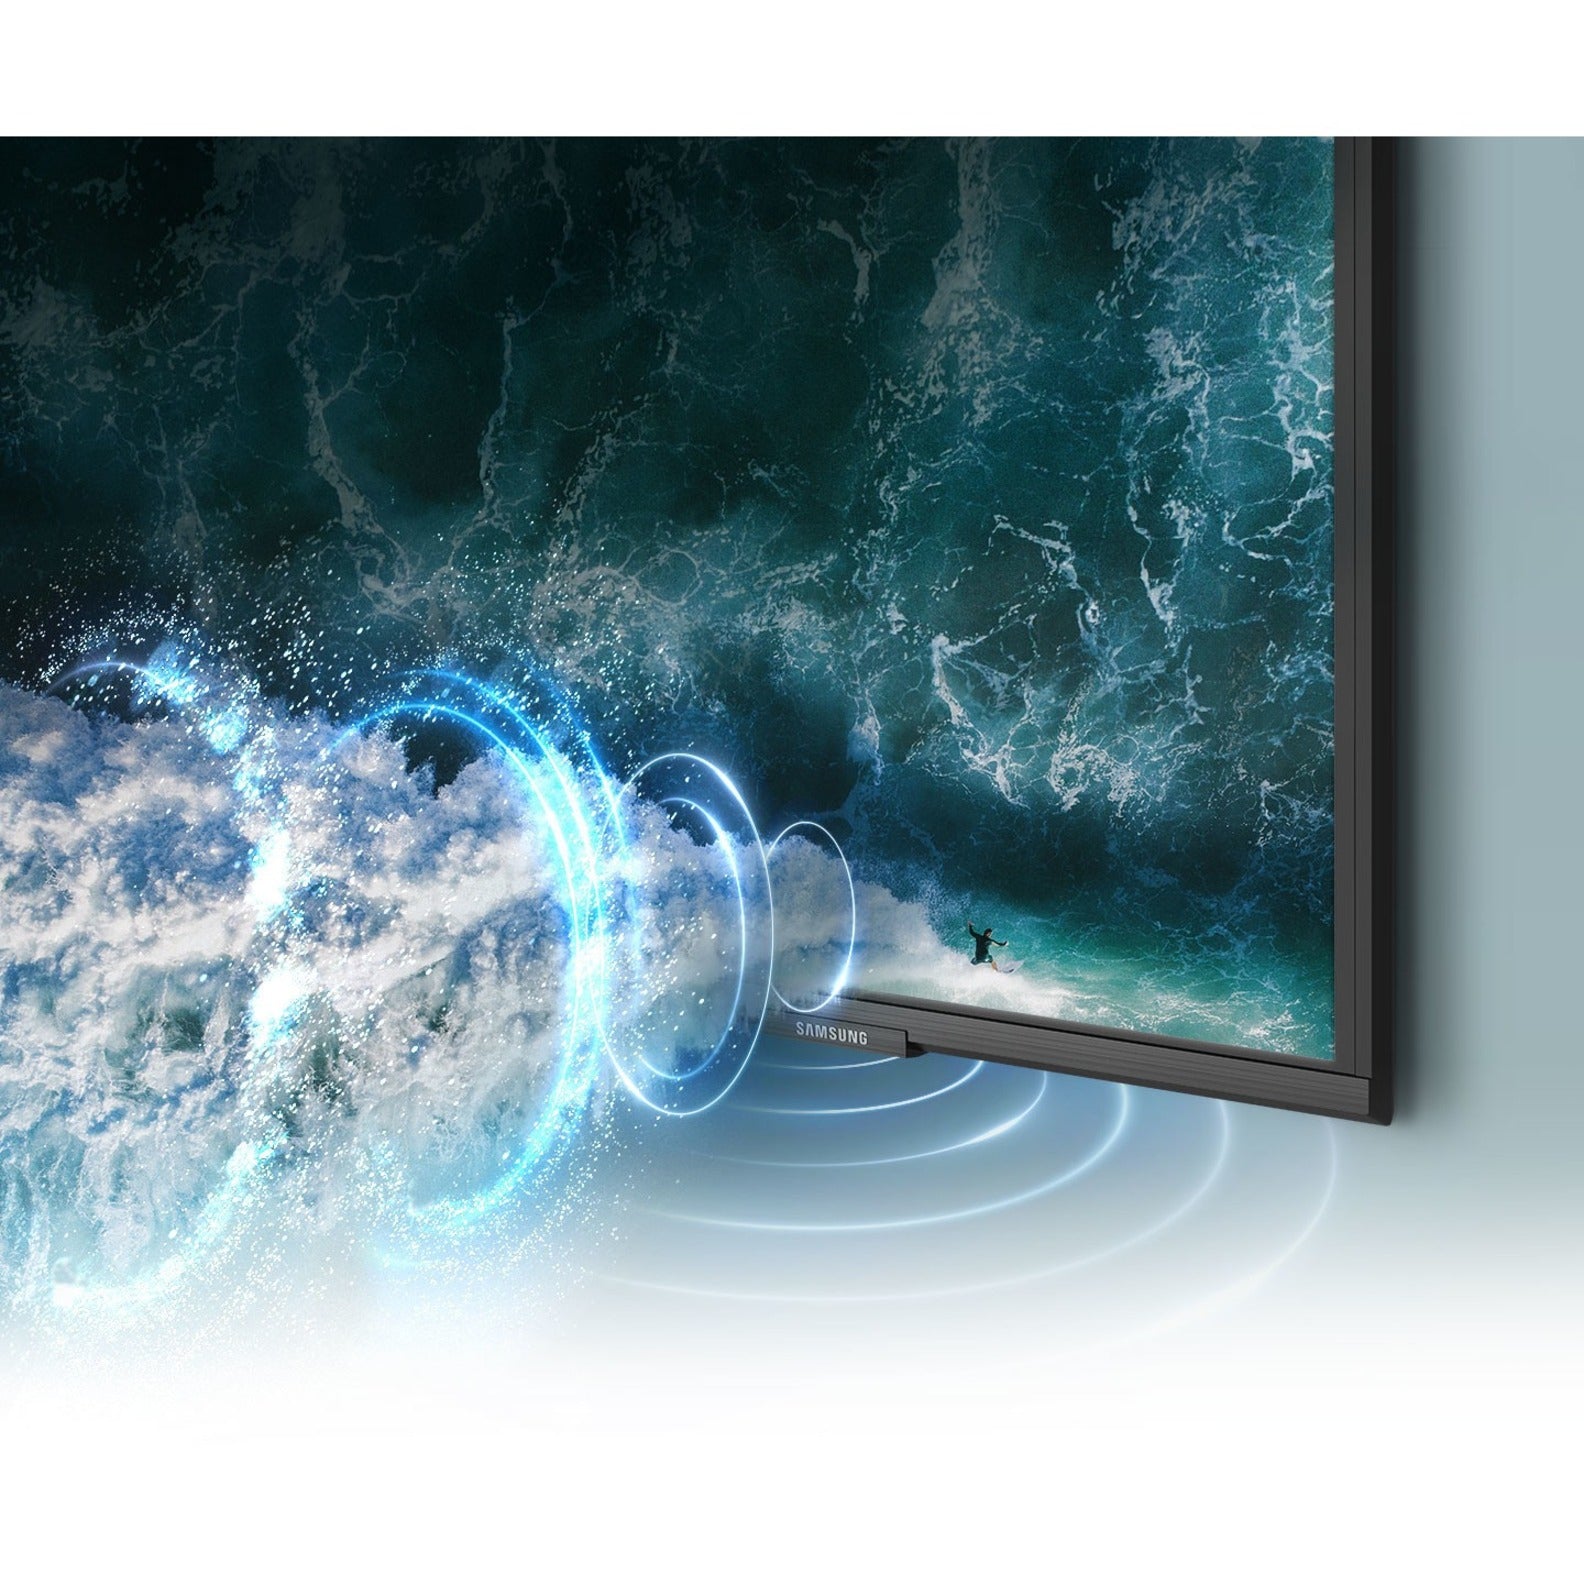 Samsung QN60Q60BAFXZA 60" QLED 4K Smart TV, Dual LED, 3 HDMI Ports, Color Volume 100%, Quantum Processor Lite 4K with AI Upscaling, Object Tracking Sound, Ambient Mode